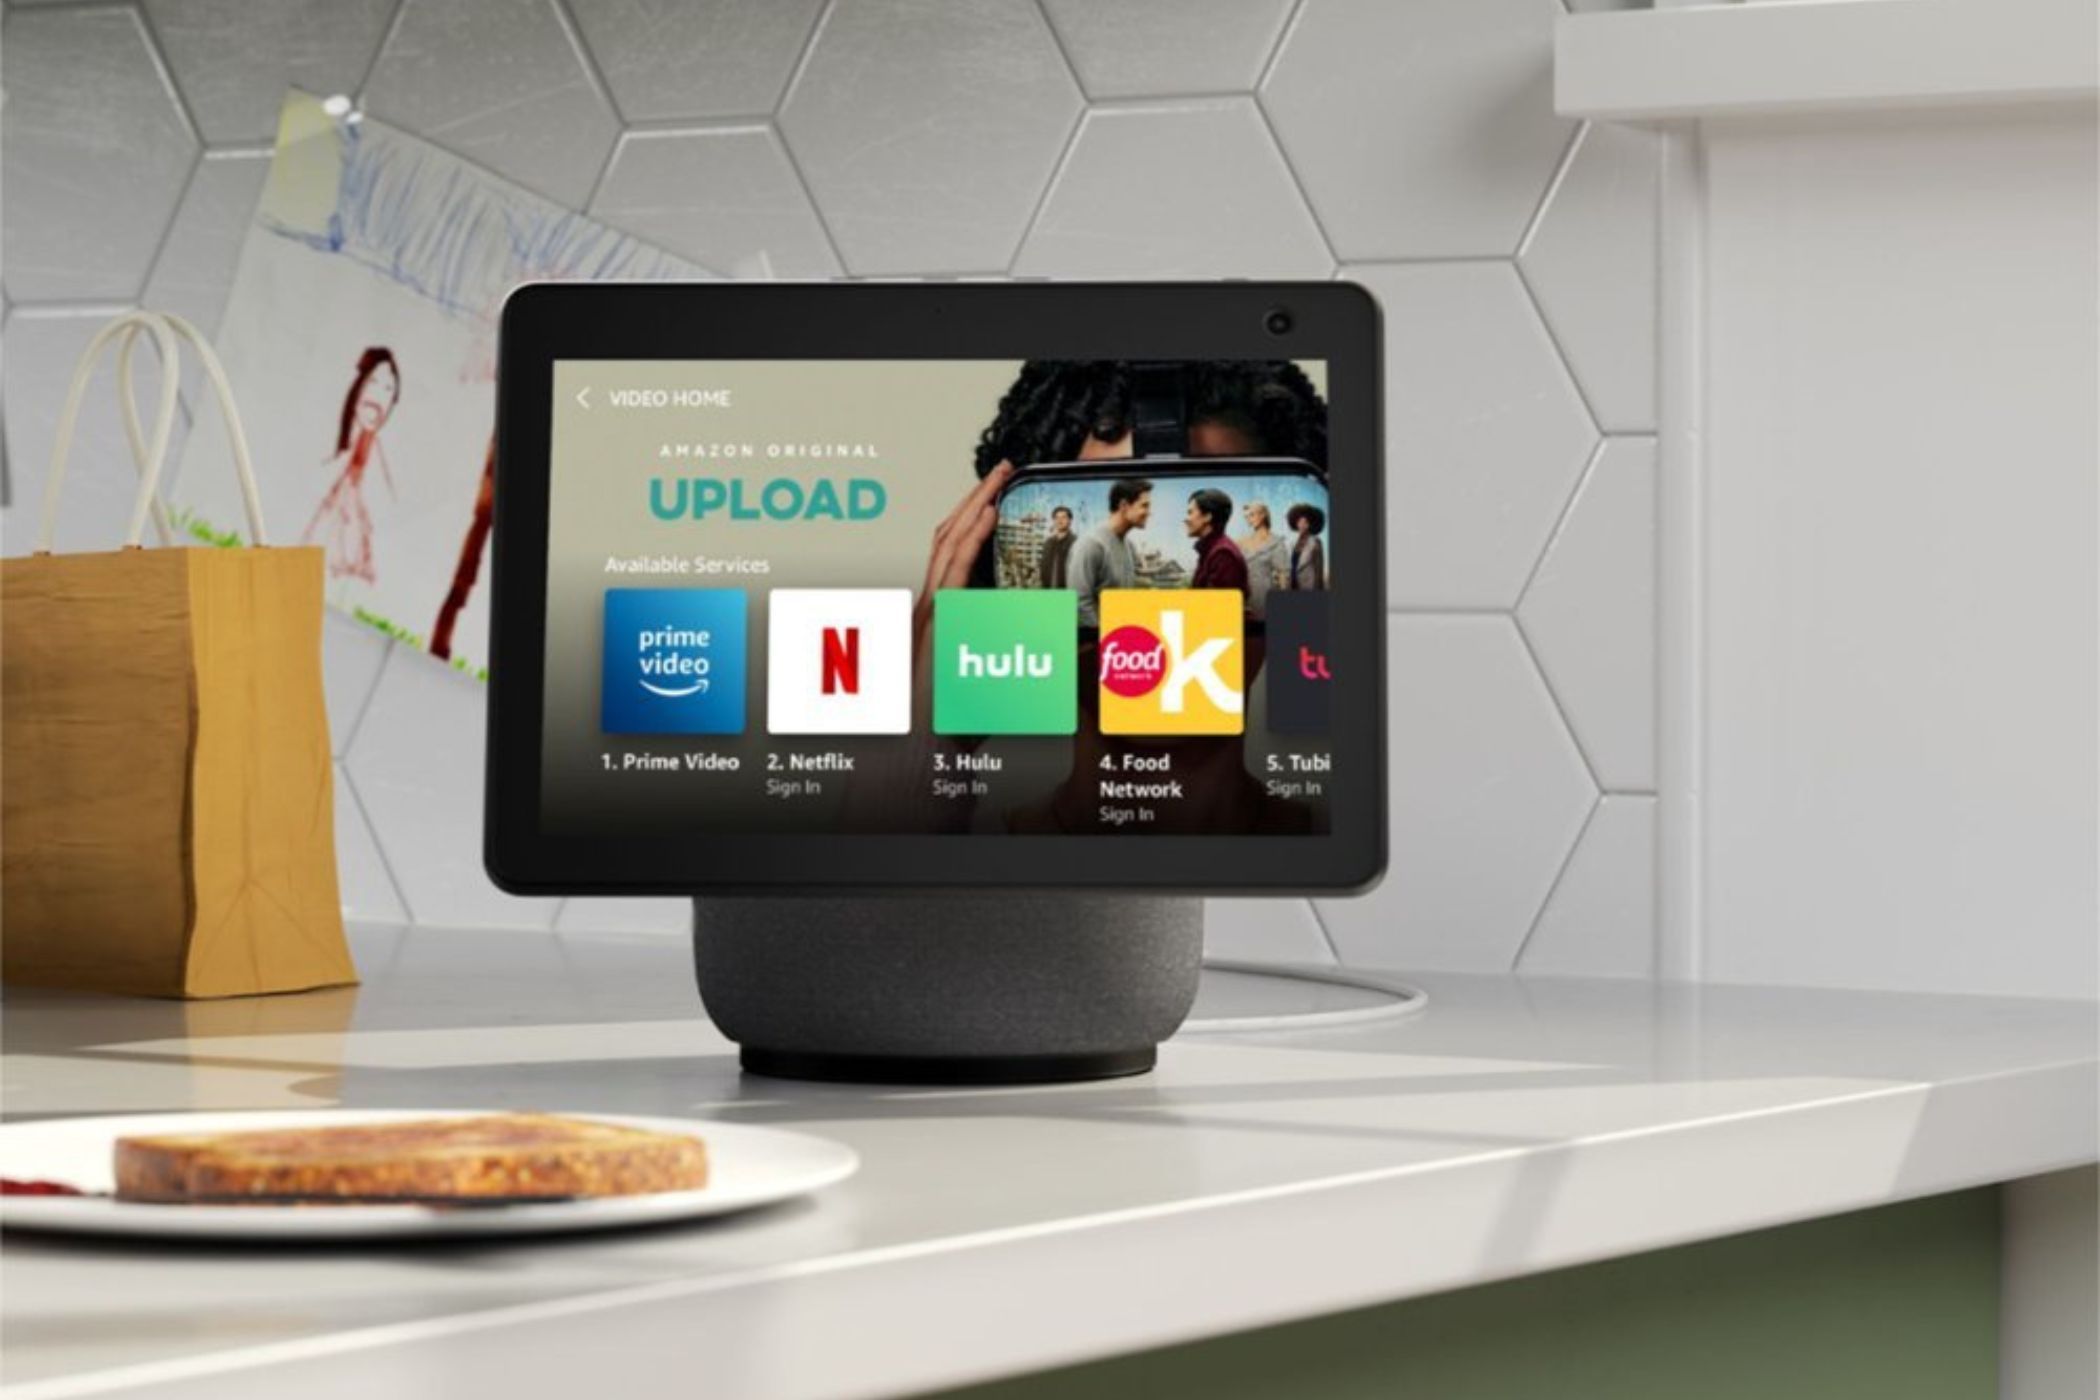 Amazon Echo Show Hub displaying Netflix, Prime Video, Hulu, and Food Network apps.